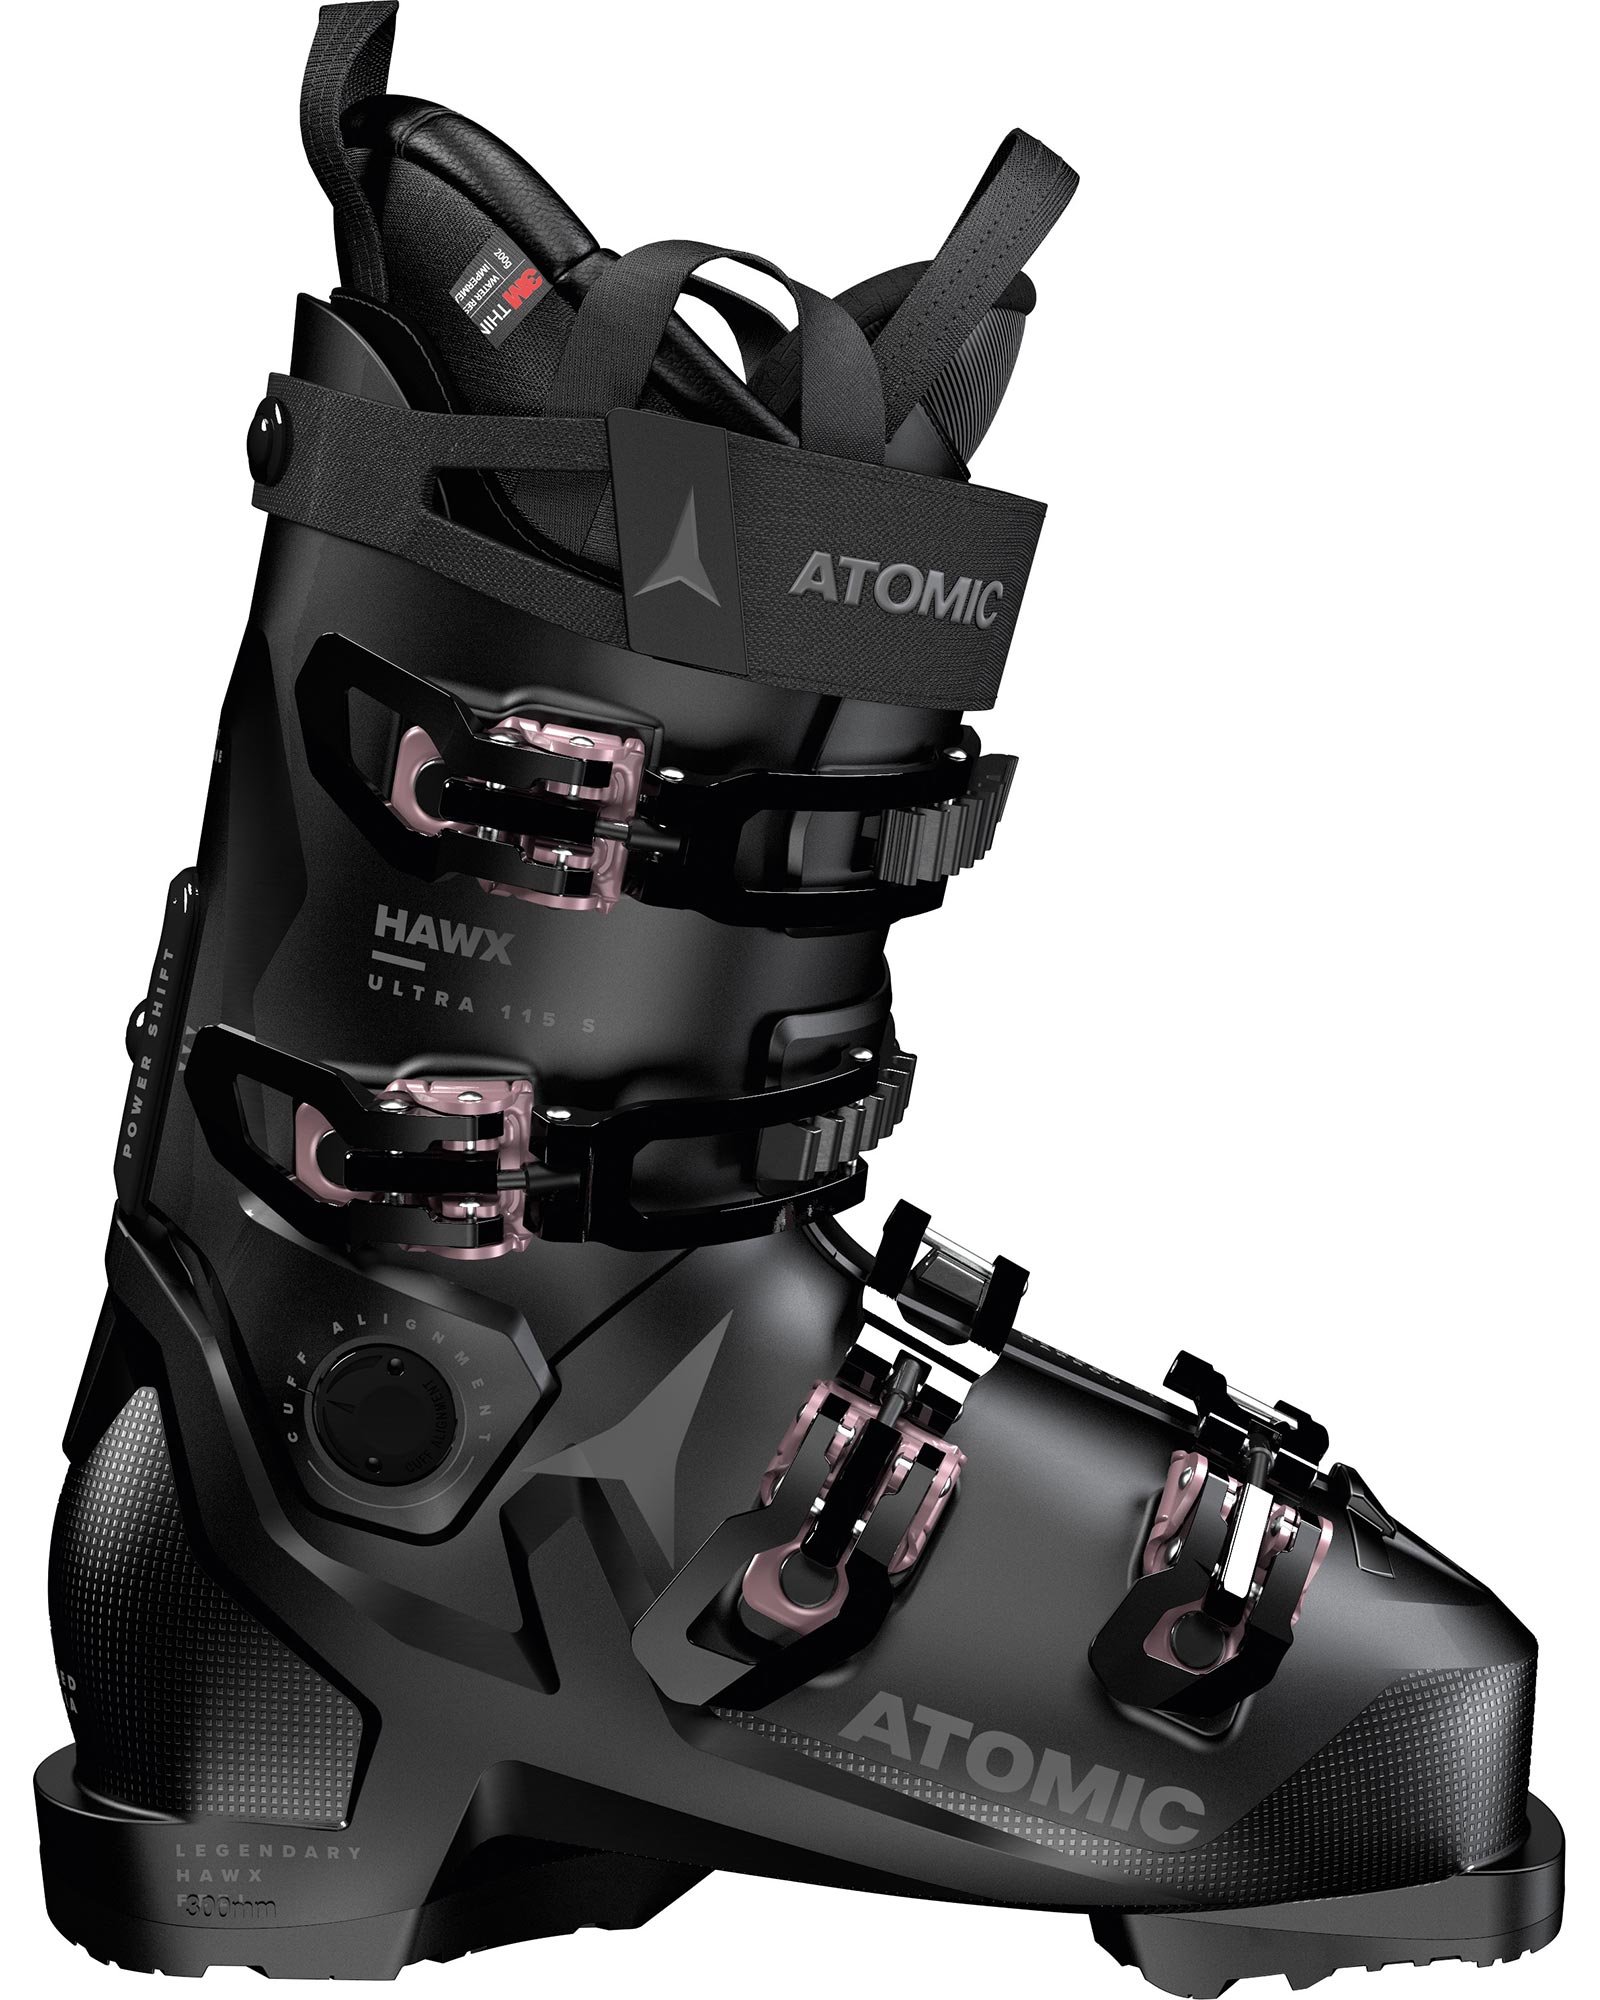 Atomic Hawx Ultra 115 S GW Women's Ski Boots 2022 0